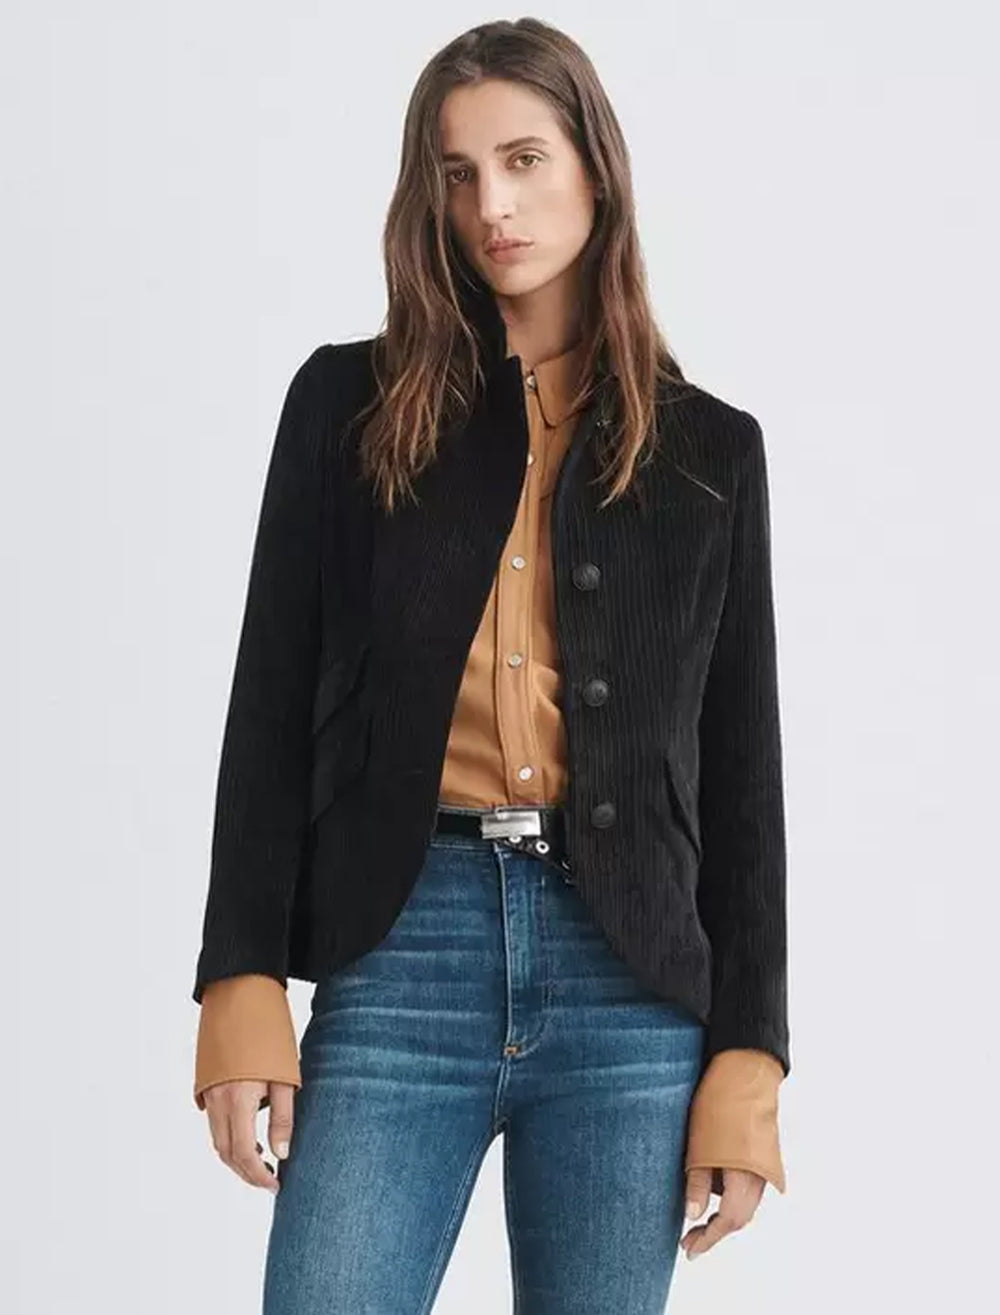 Model wearing Rag & Bone's slade cord blazer in black.